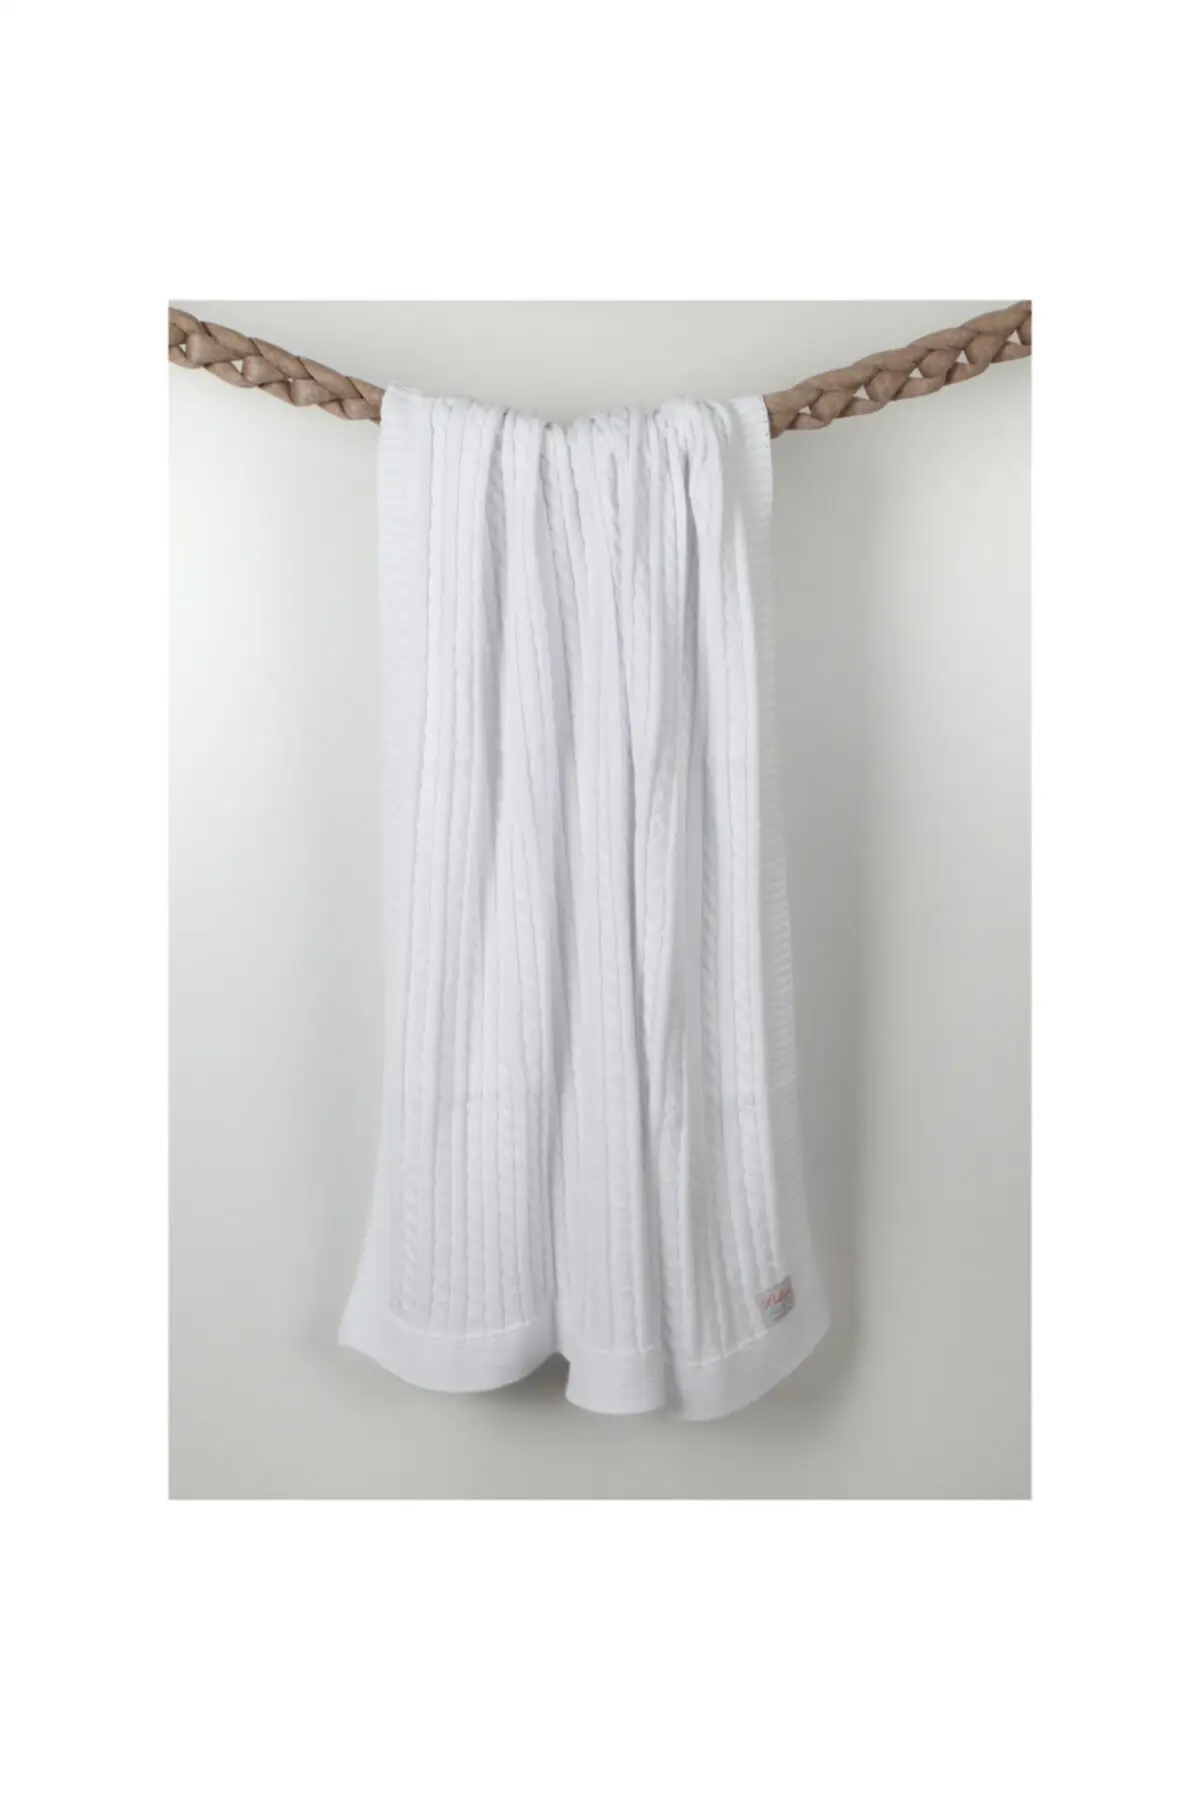 Unisex White 90x90 cm Knit Baby Blanket 8681245000912 Baby & Kids Home Textile Textile & Furniture